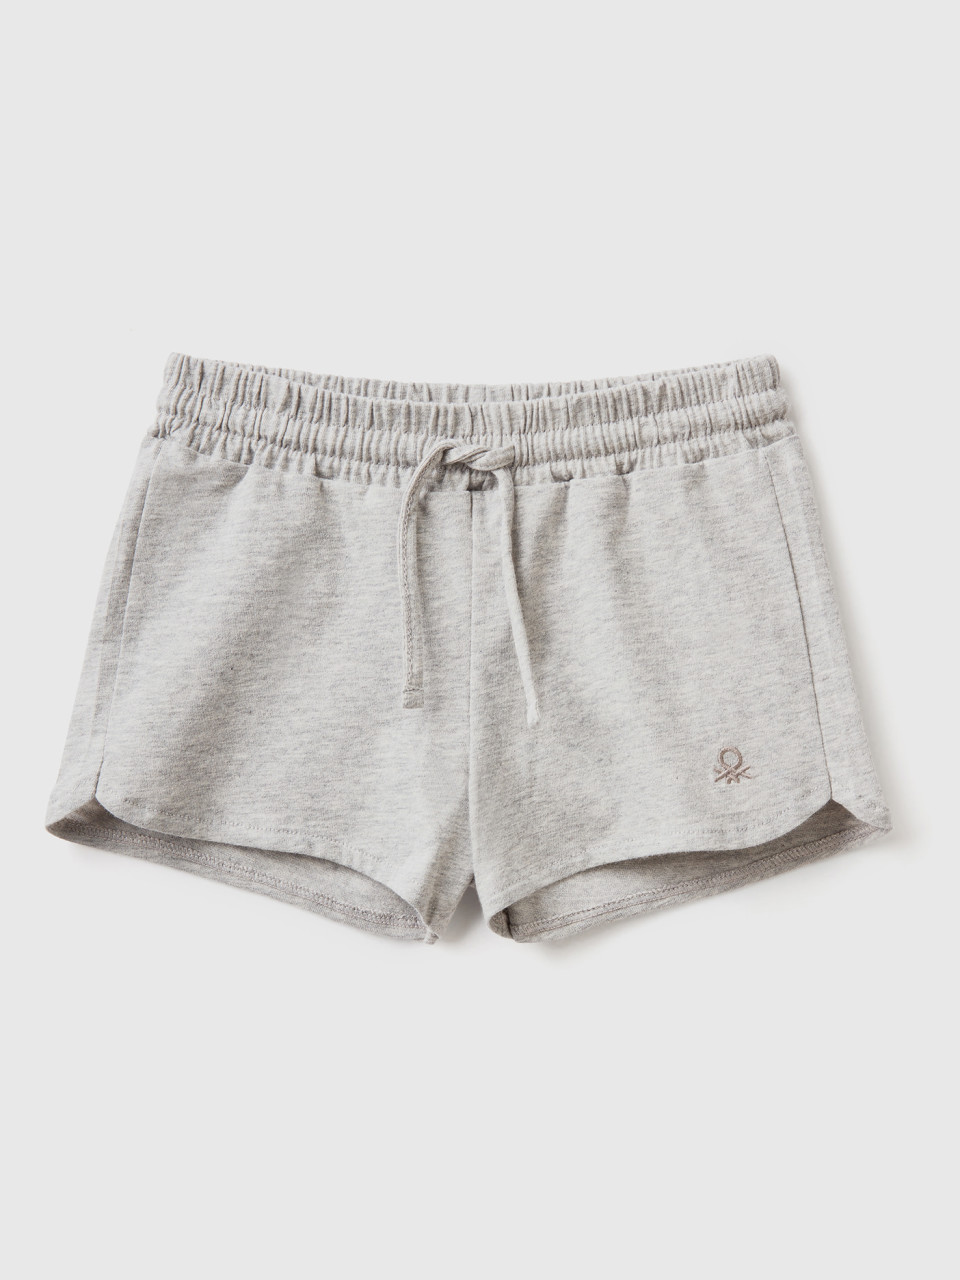 Benetton, Shorts With Drawstring In Organic Cotton, Light Gray, Kids